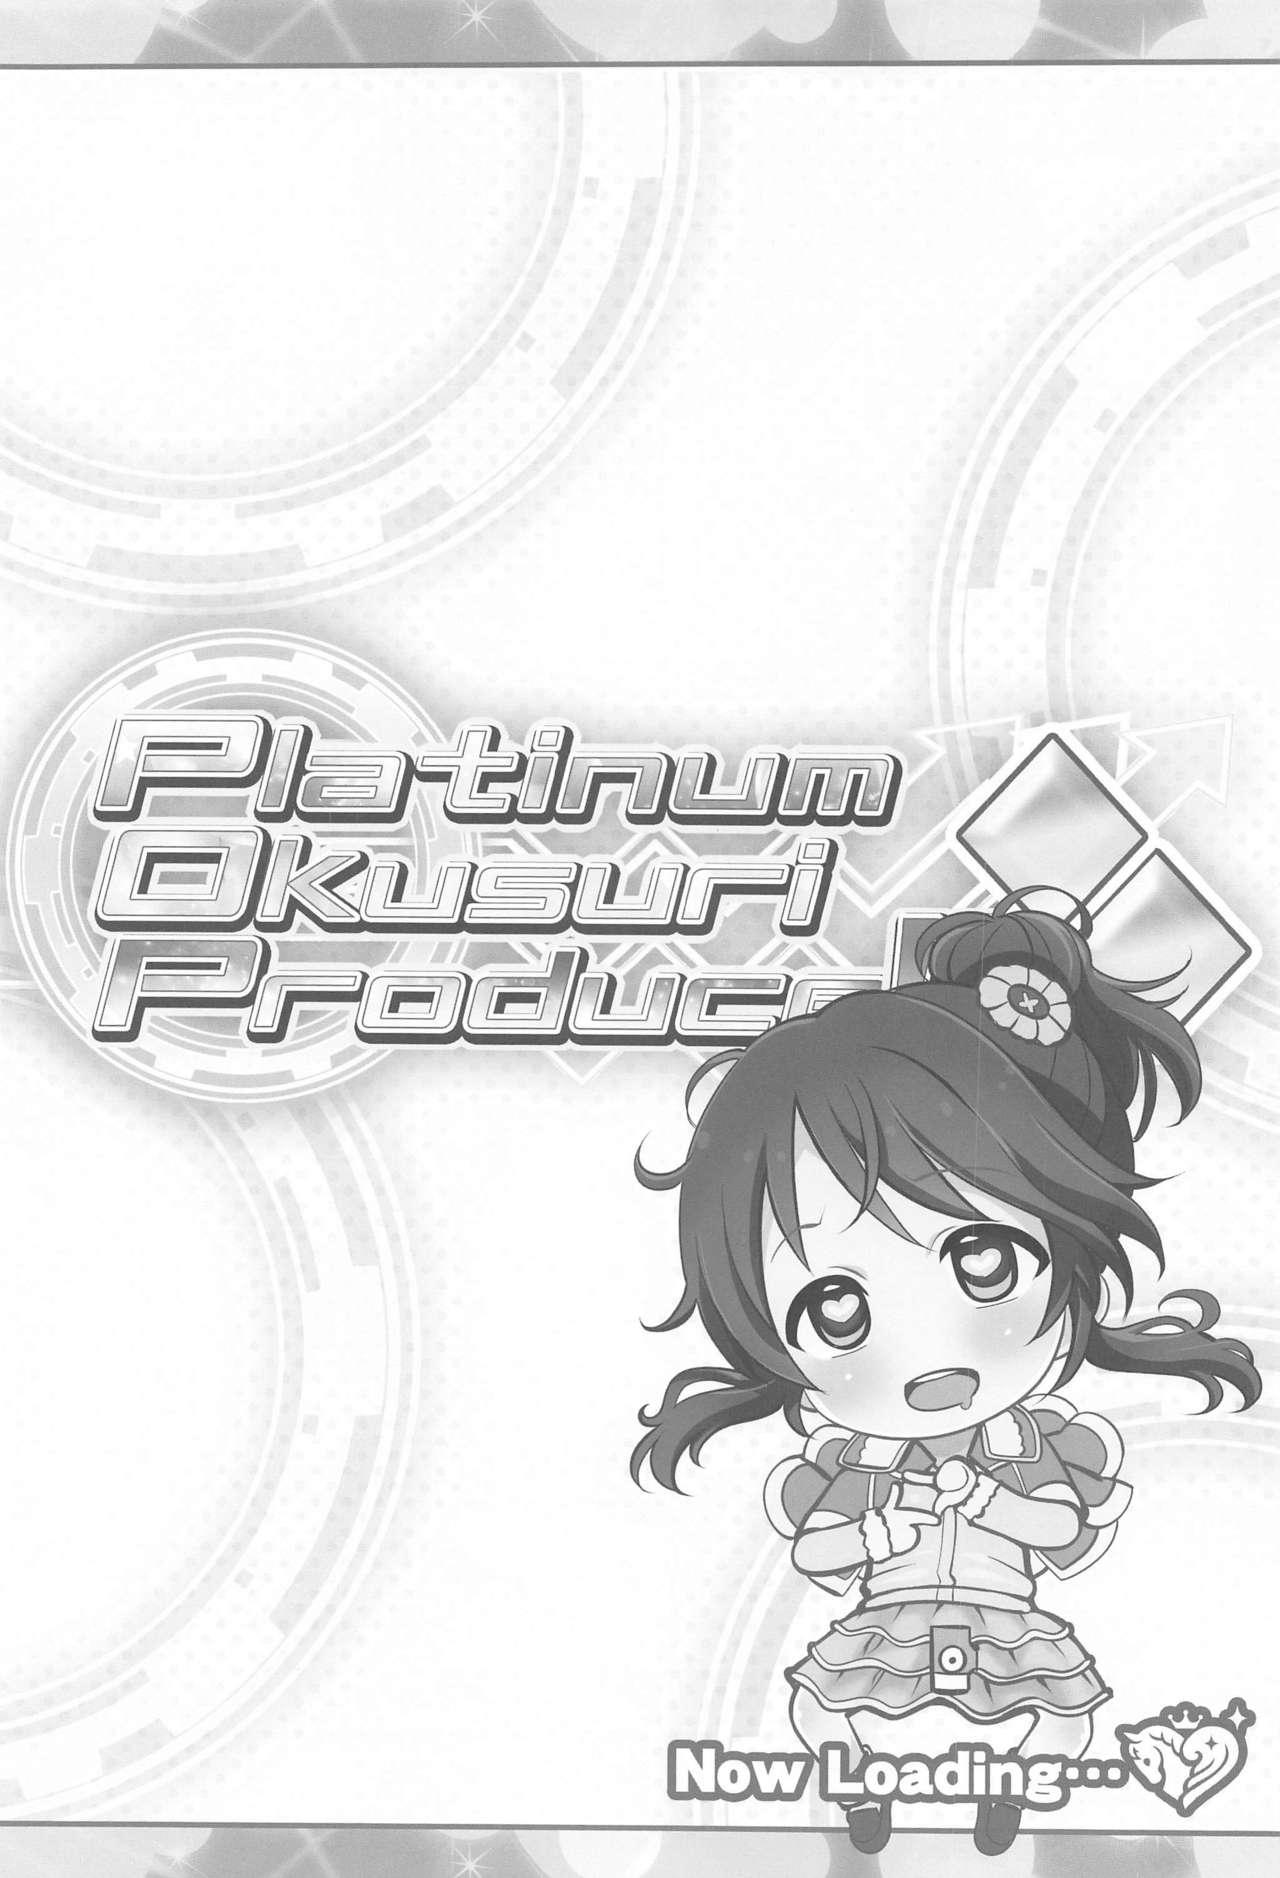 Platinum Okusuri Produce!!!! ◇◇ 3